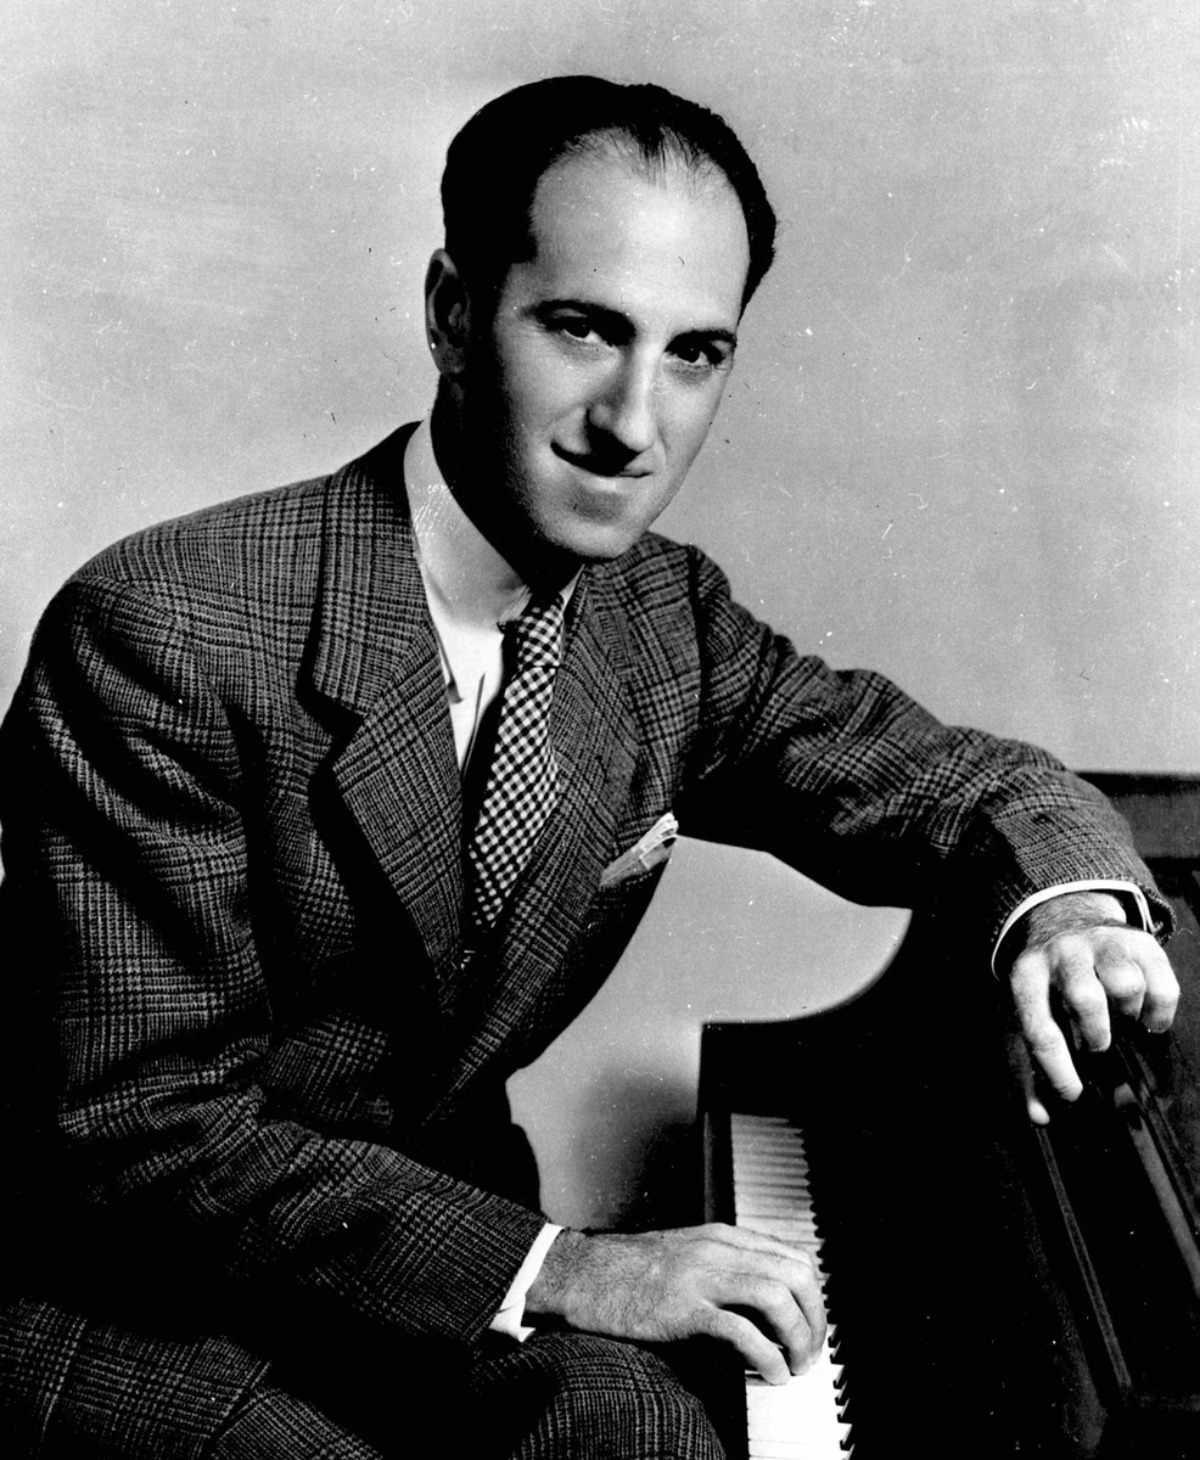 Composer George Gershwin